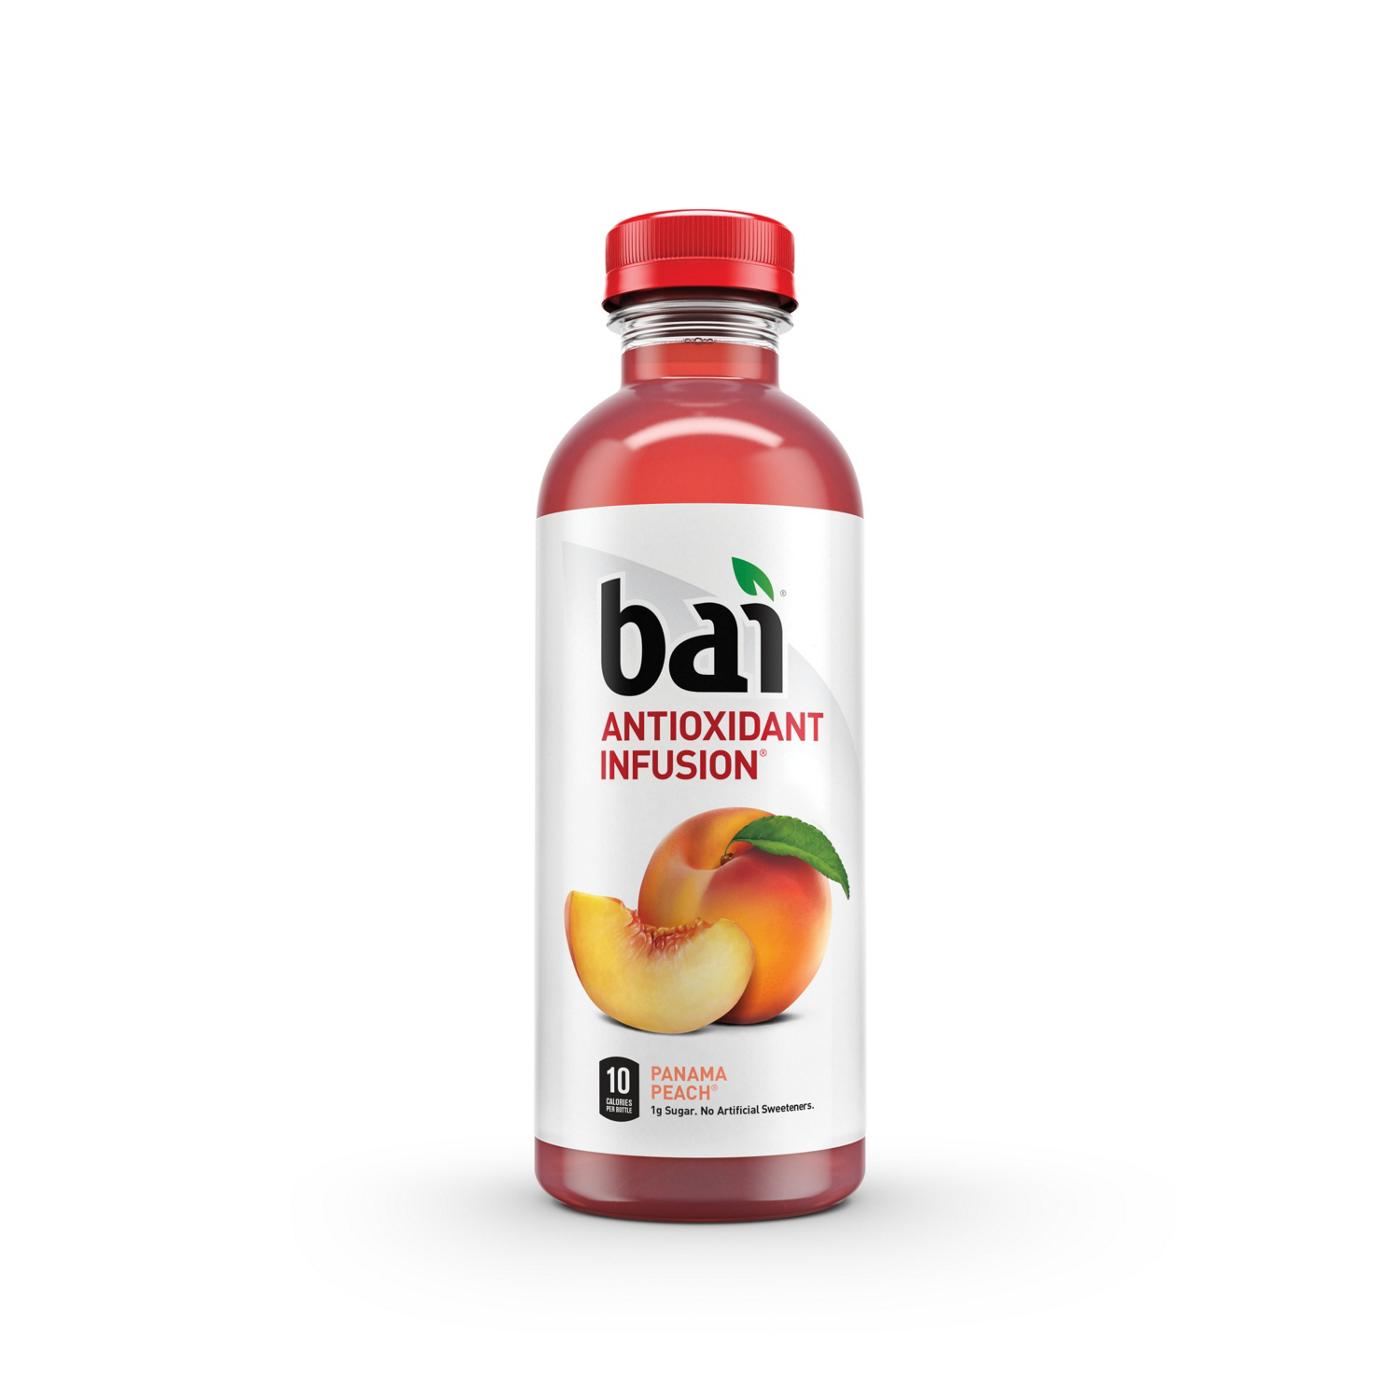 Bai 5 Antioxidant Infusions Panama Peach Beverage; image 1 of 4